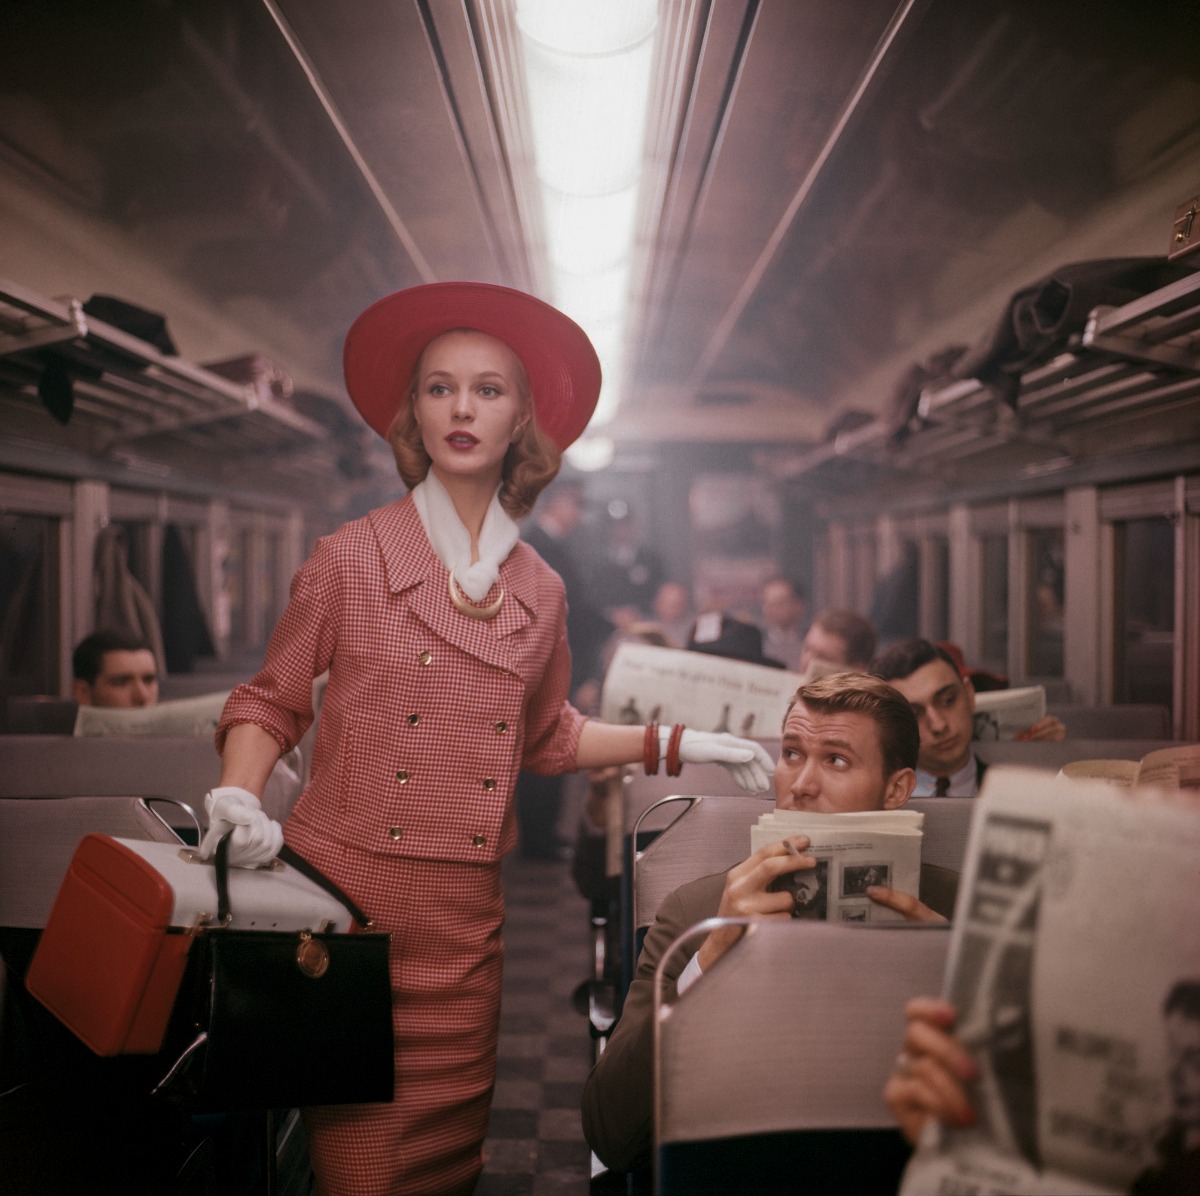  The Fashion Train, NYC 1960